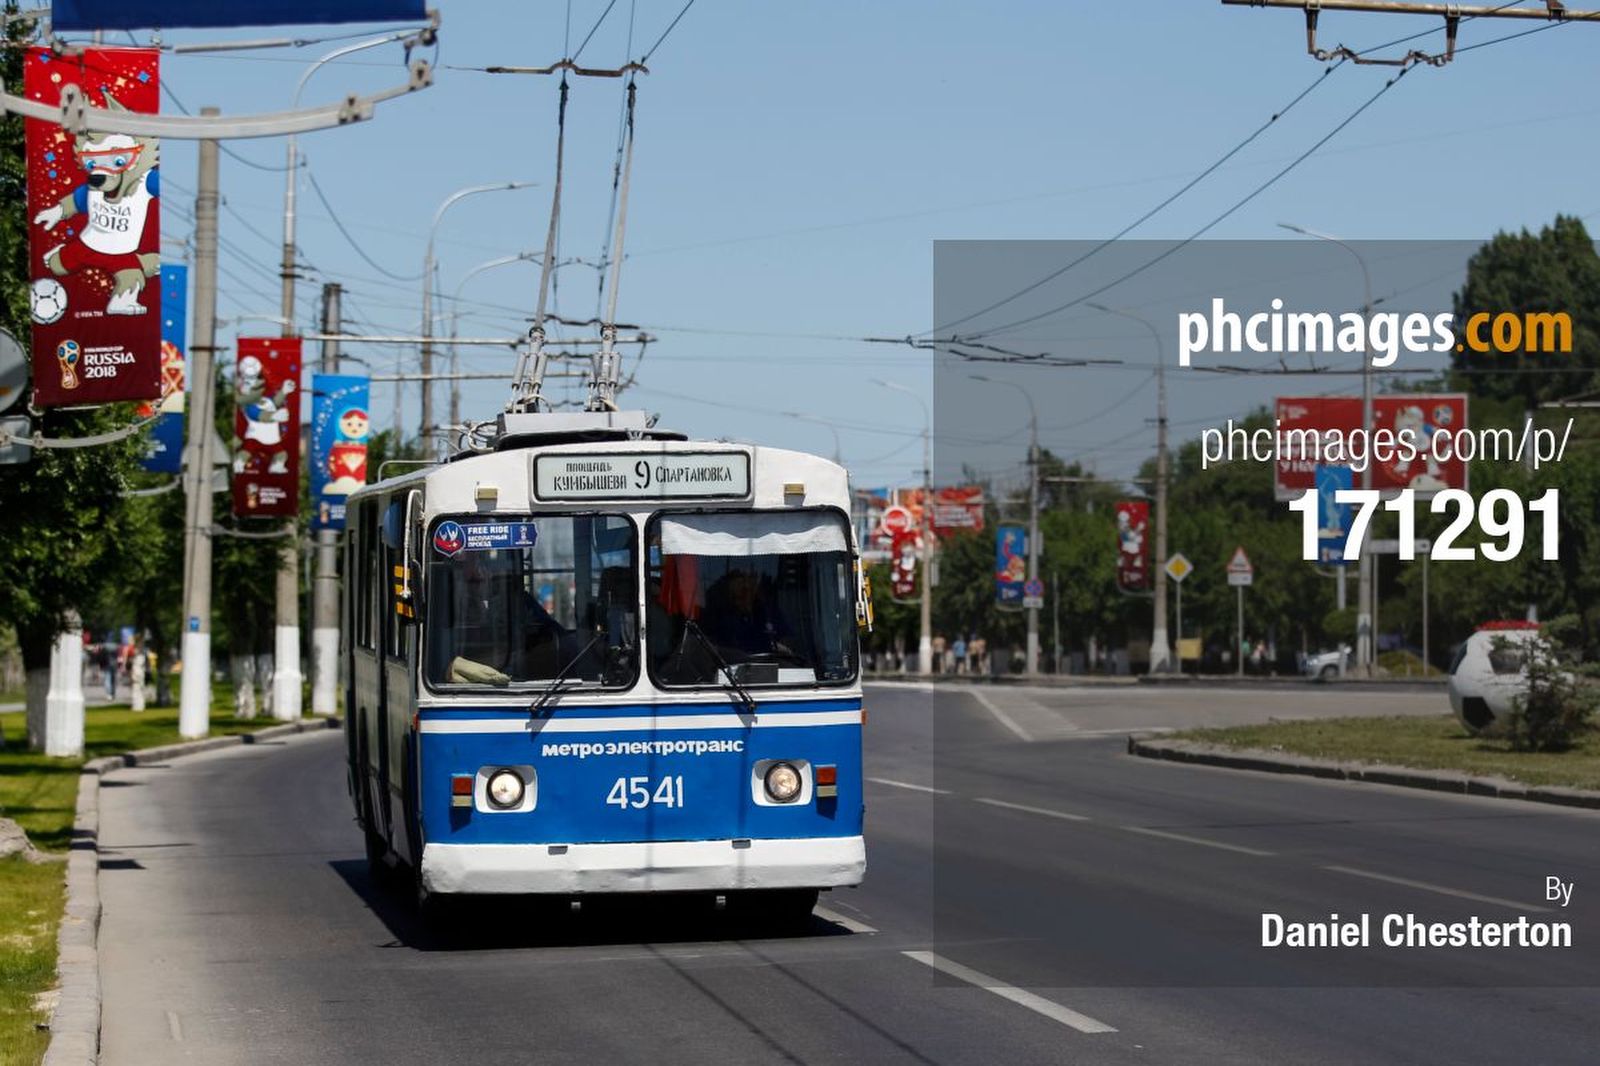 A state of the art Volgograd tram